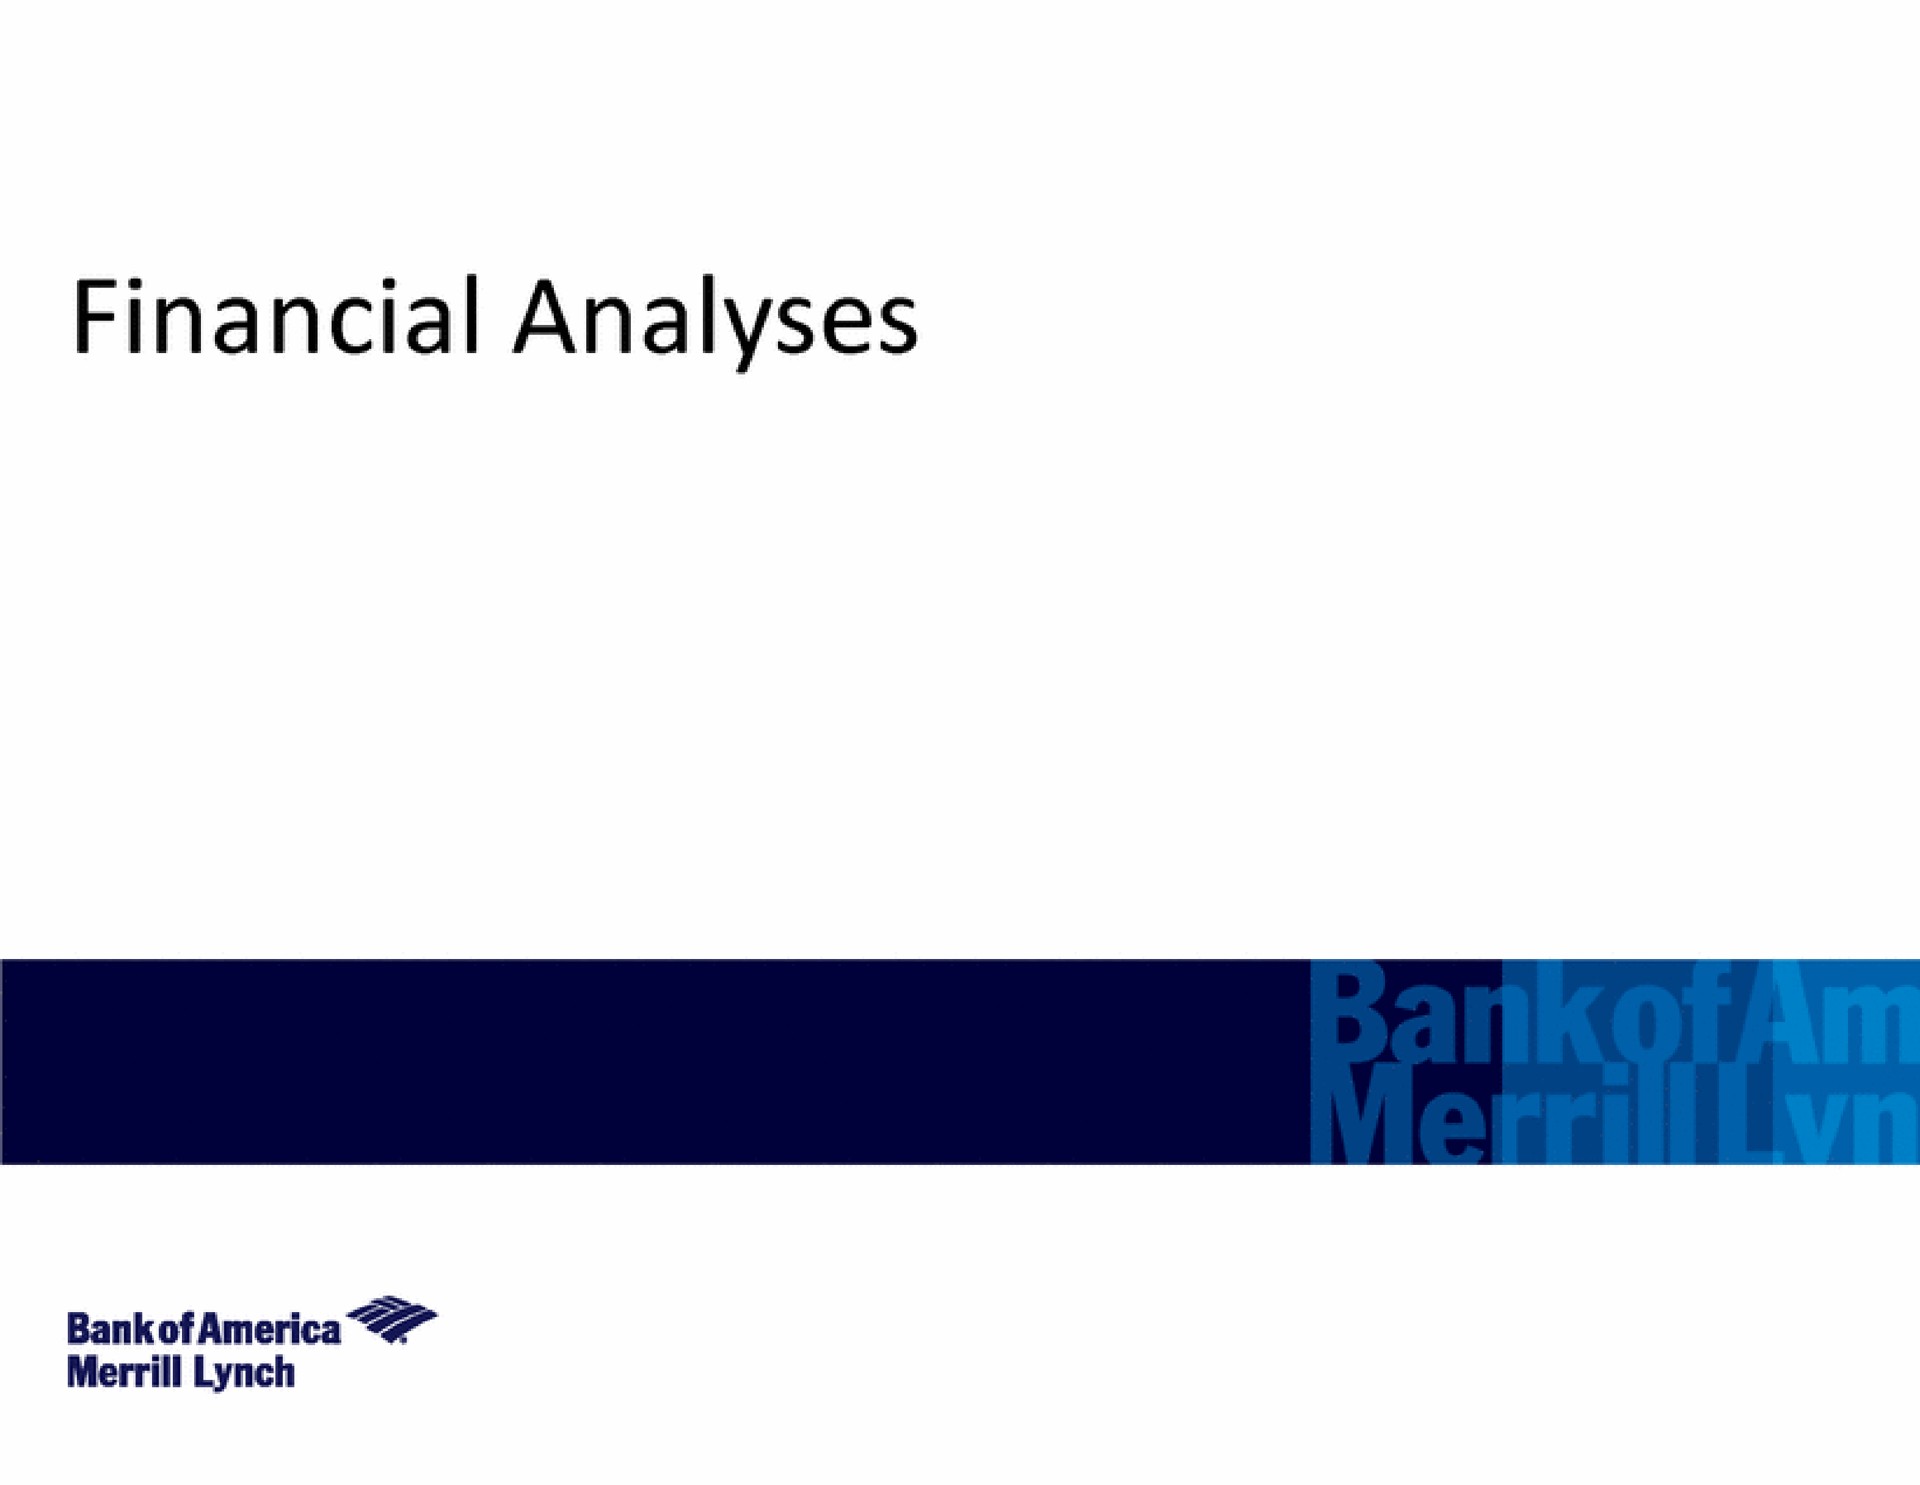 financial analyses lynch | Bank of America